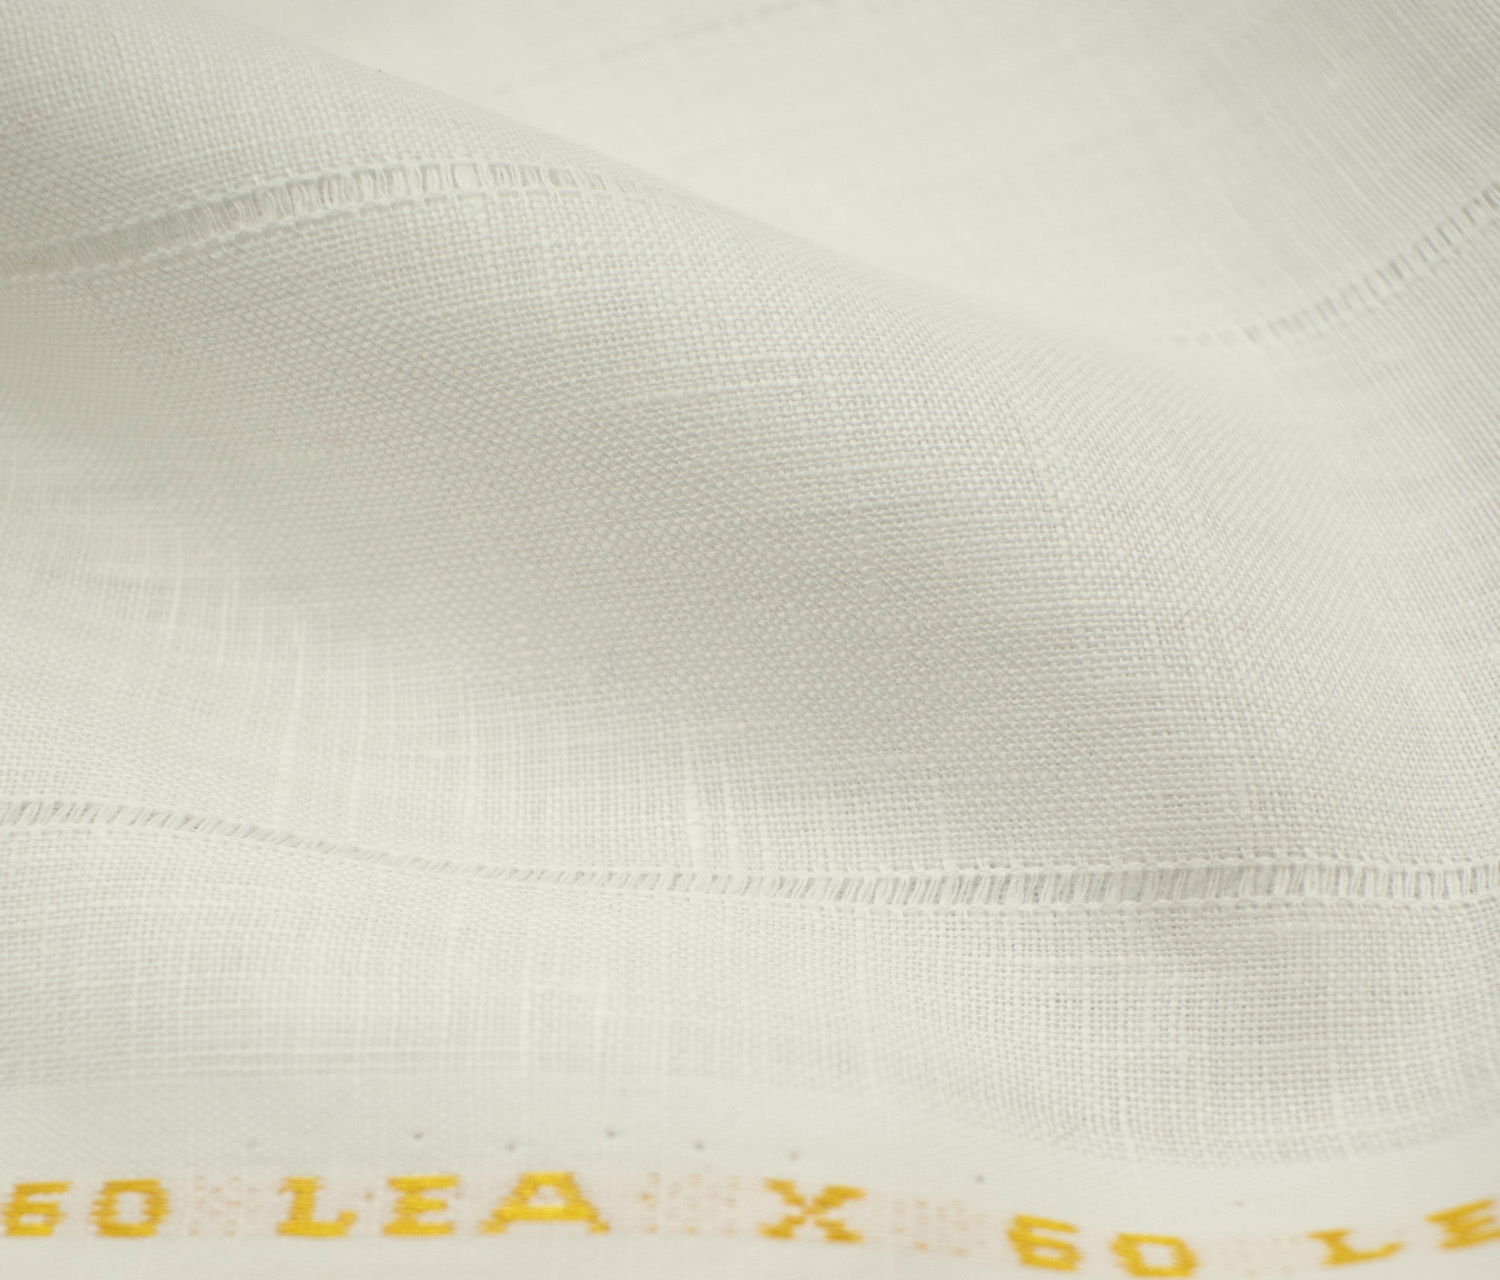 GLORIA FASHION Unstitched Linen Cotton Shirt and Kurta Fabrics for Men  Color Grey  2 mtr Cut width44cc110  Amazonin Clothing   Accessories